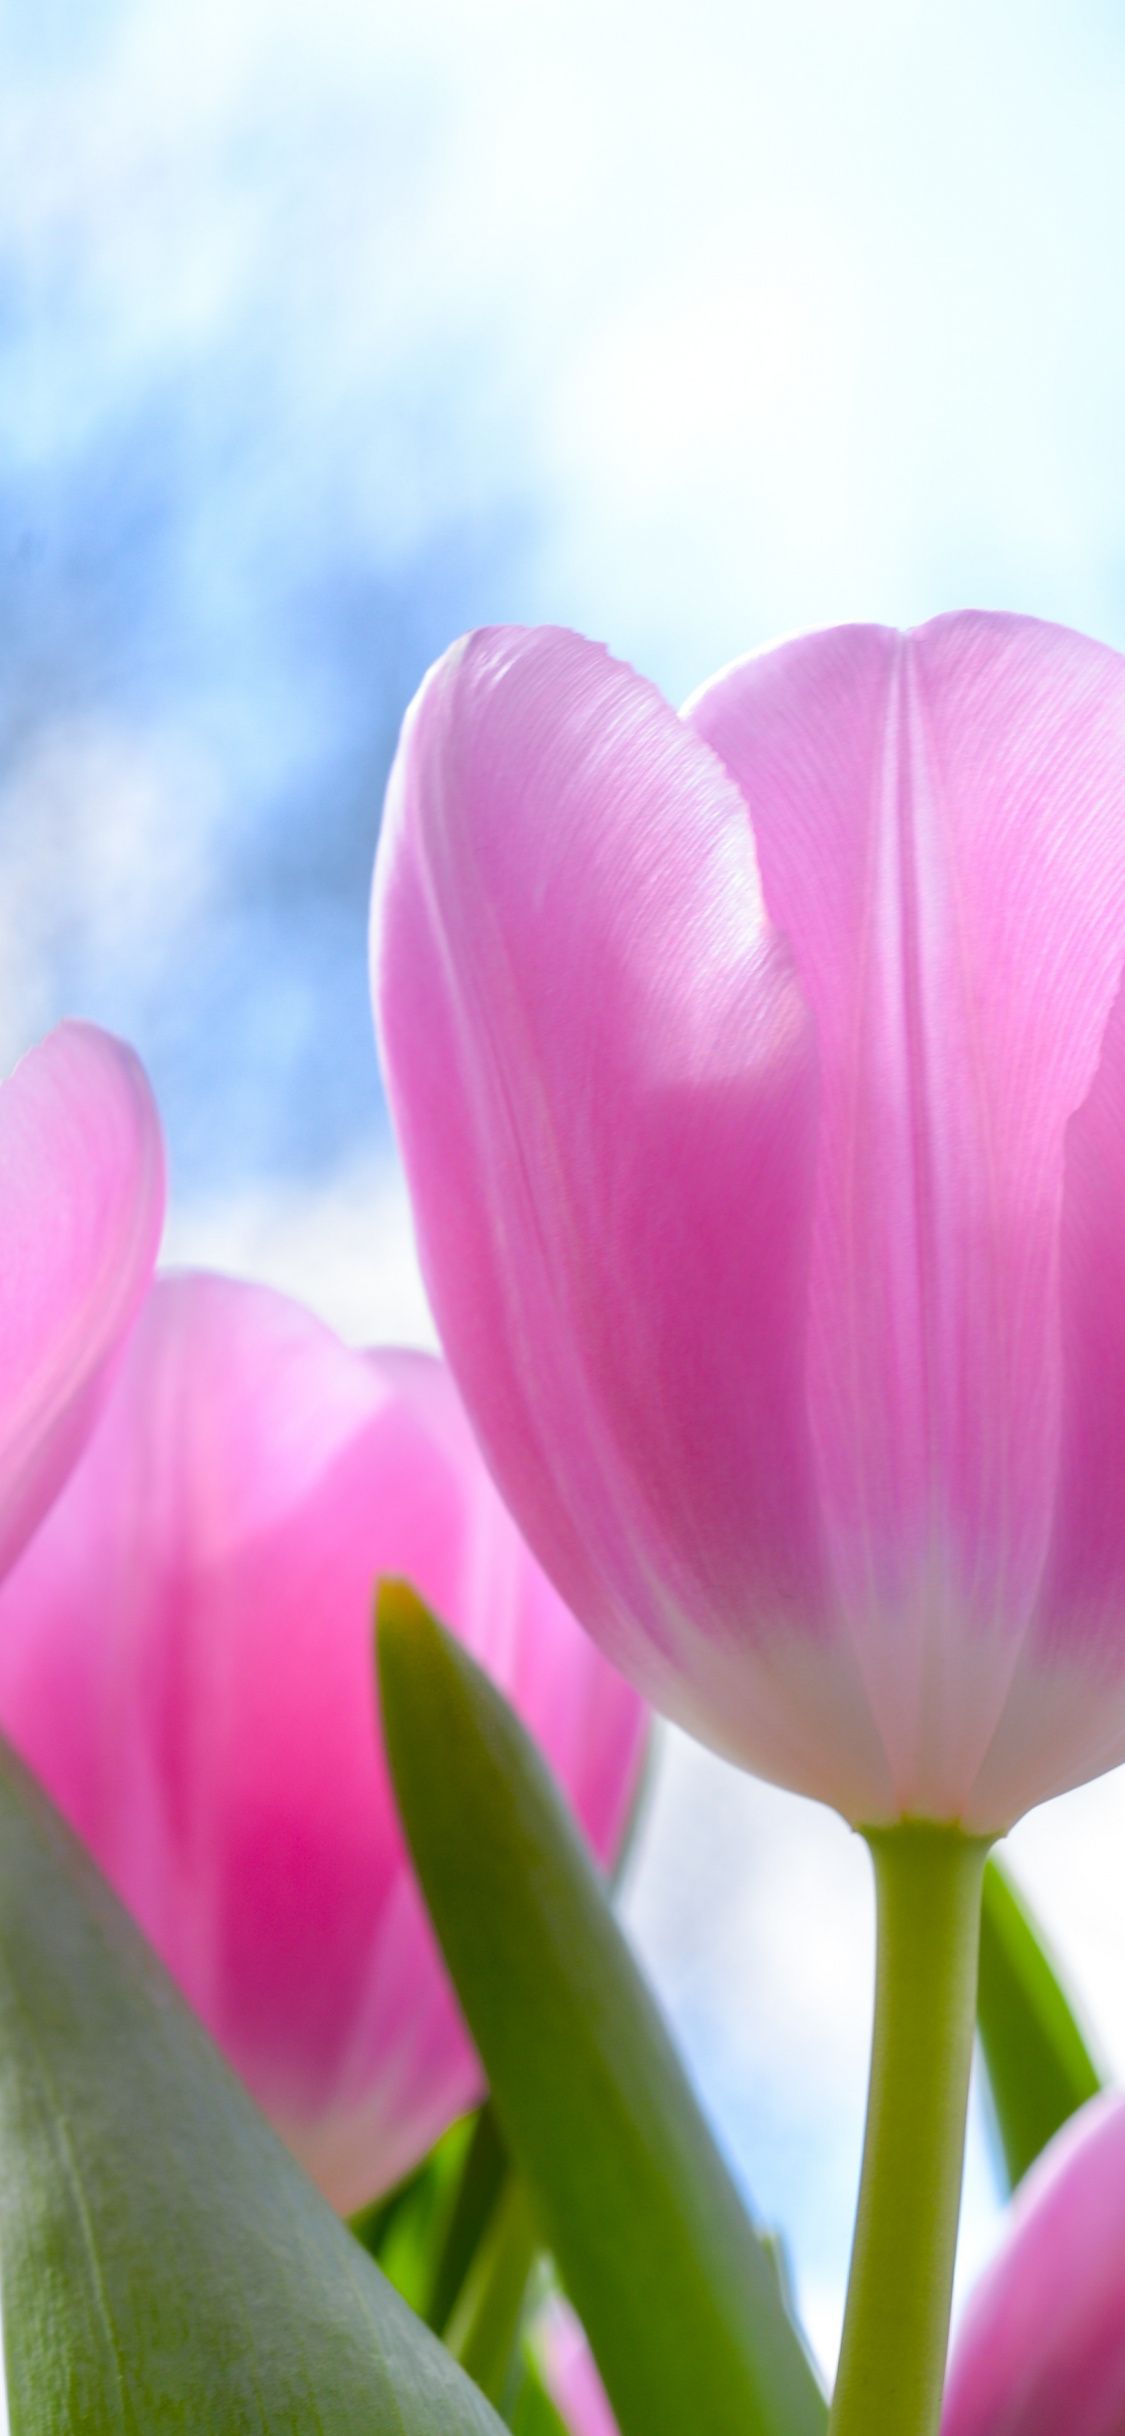 Download 1125x2436 wallpaper fresh, pink tulips, flowers, iphone x